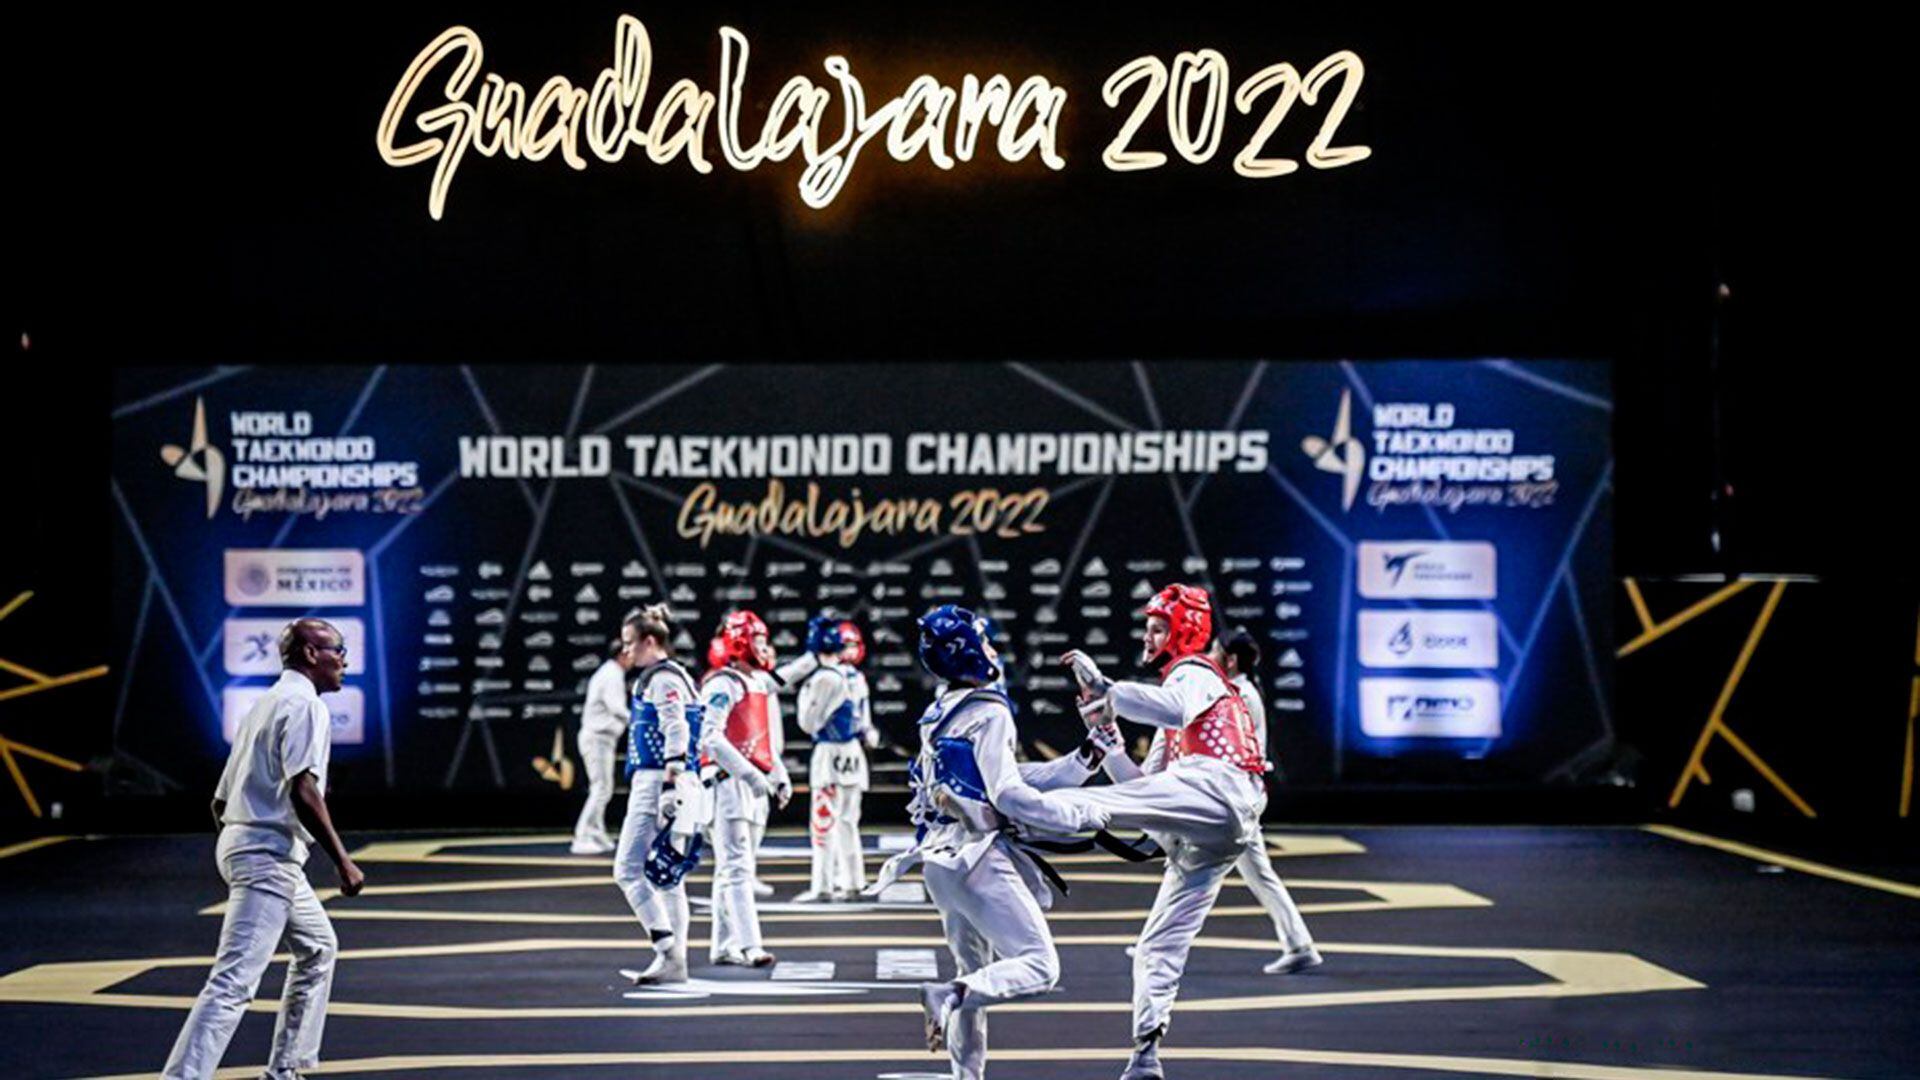 Guadalajara 2022 World Taekwondo Championships